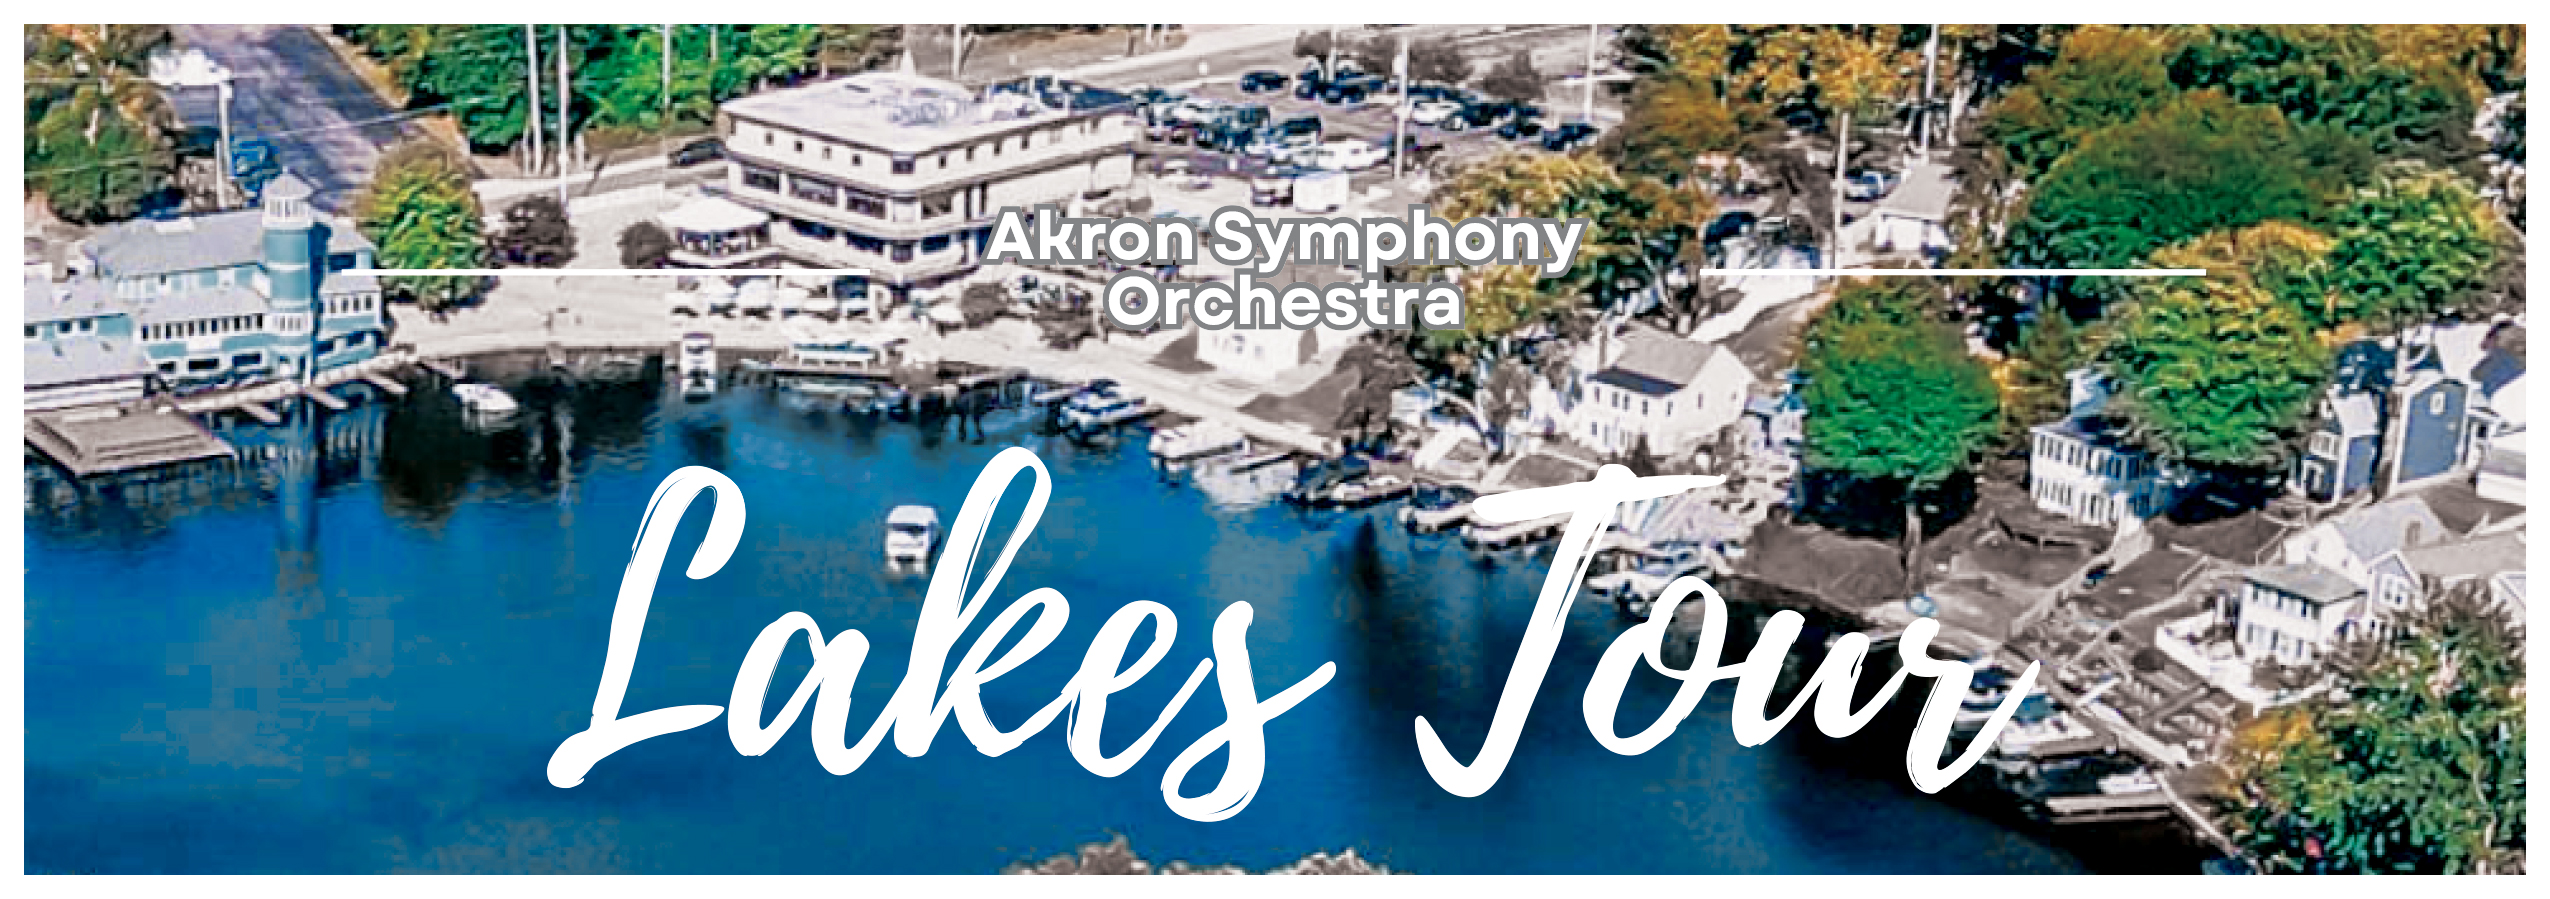 Akron Symphony Gala logo